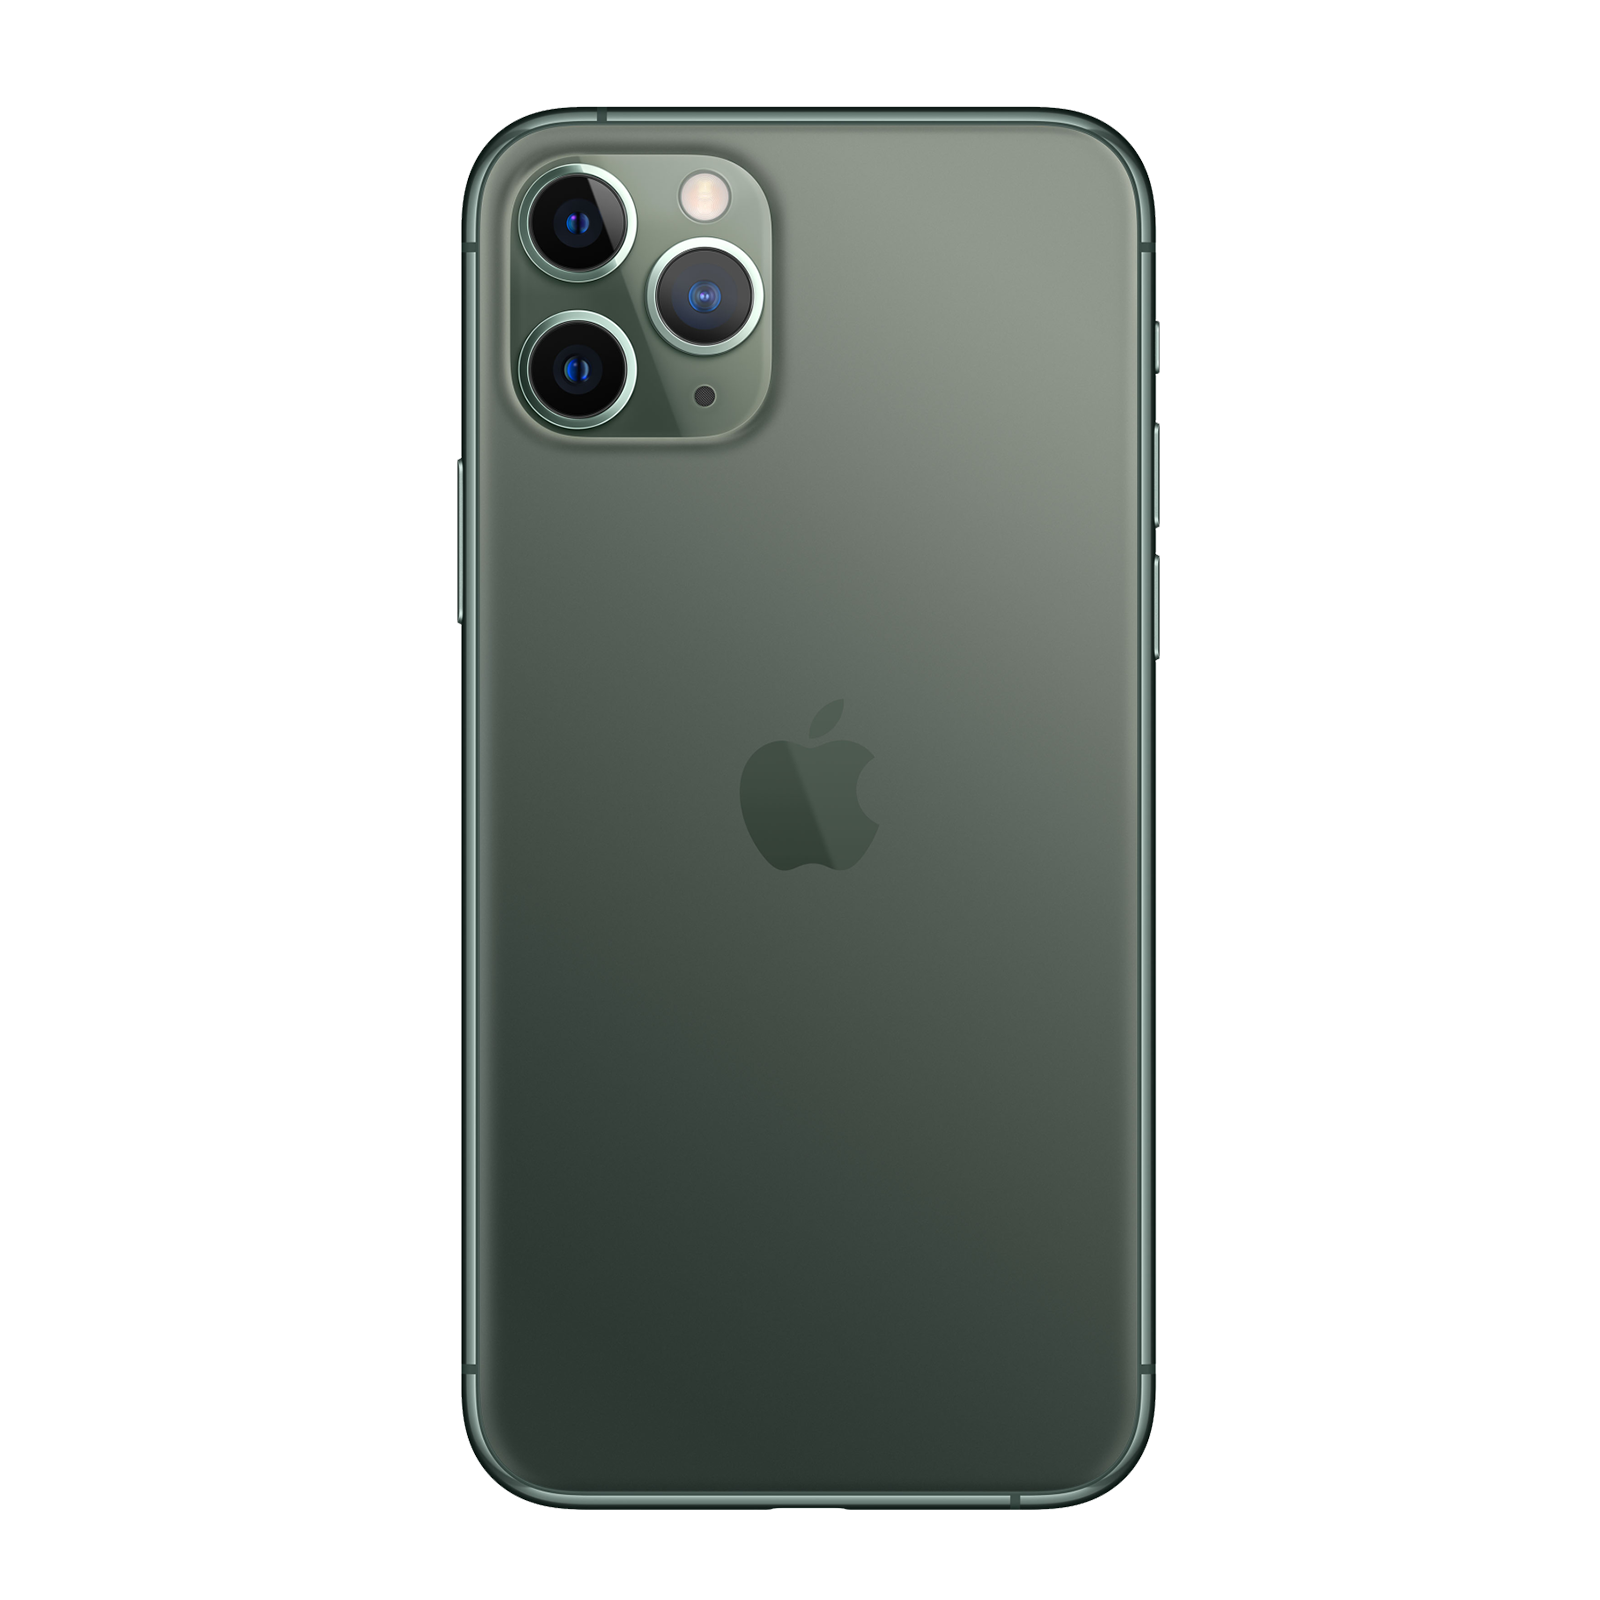 Apple iPhone 11 Pro 64GB Midnight Green Good - Verizon